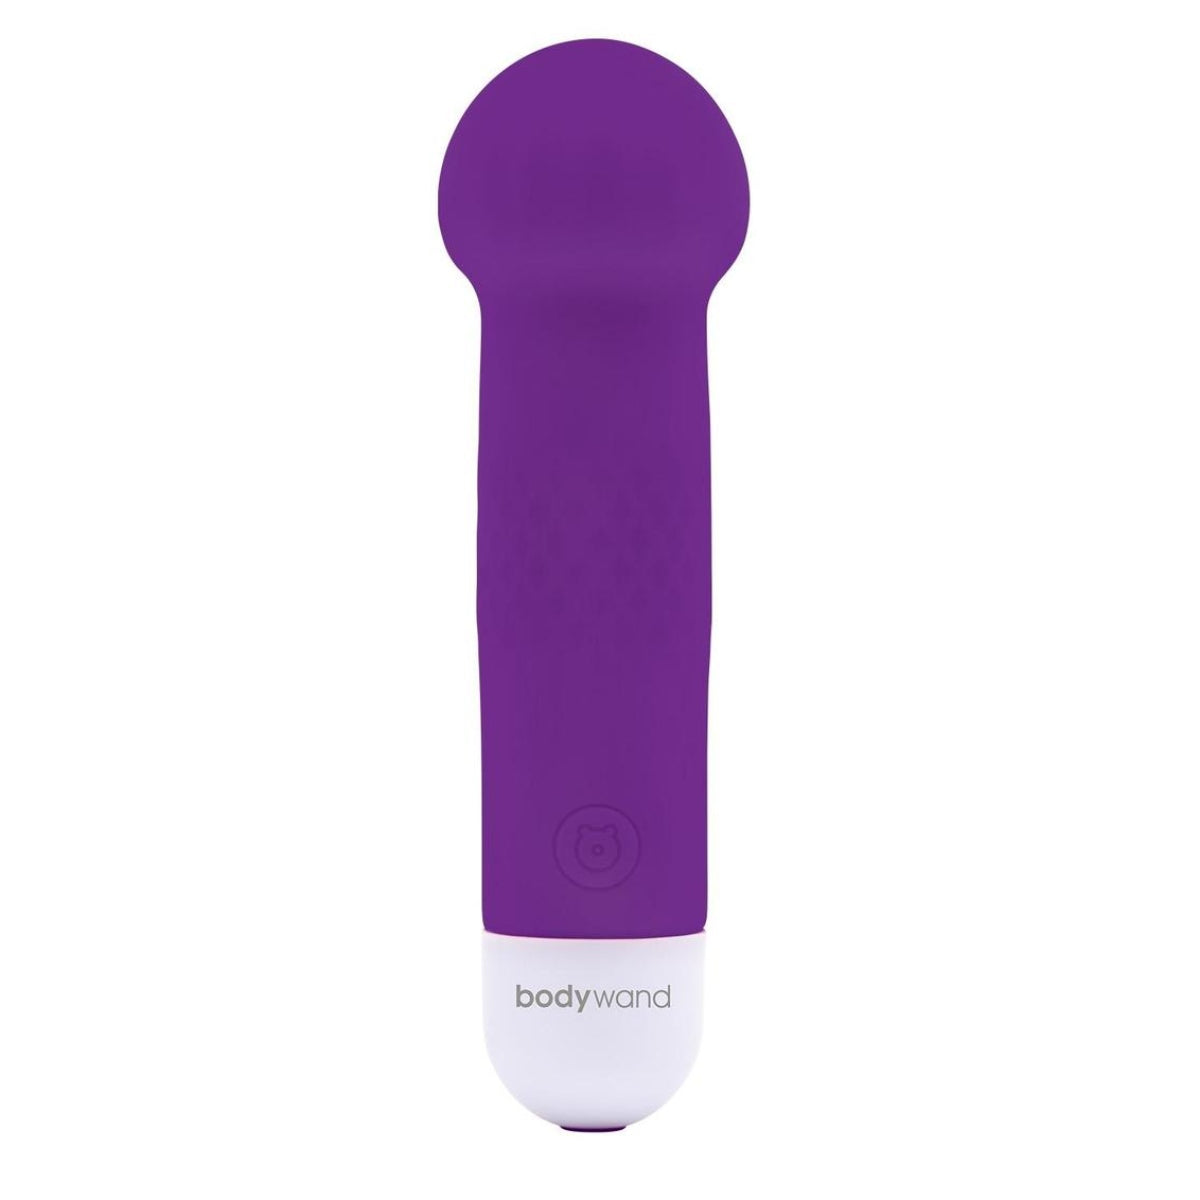 Bodywand Neon Mini Vibe Pocket Wand Vibrator Purple - Simply Pleasure